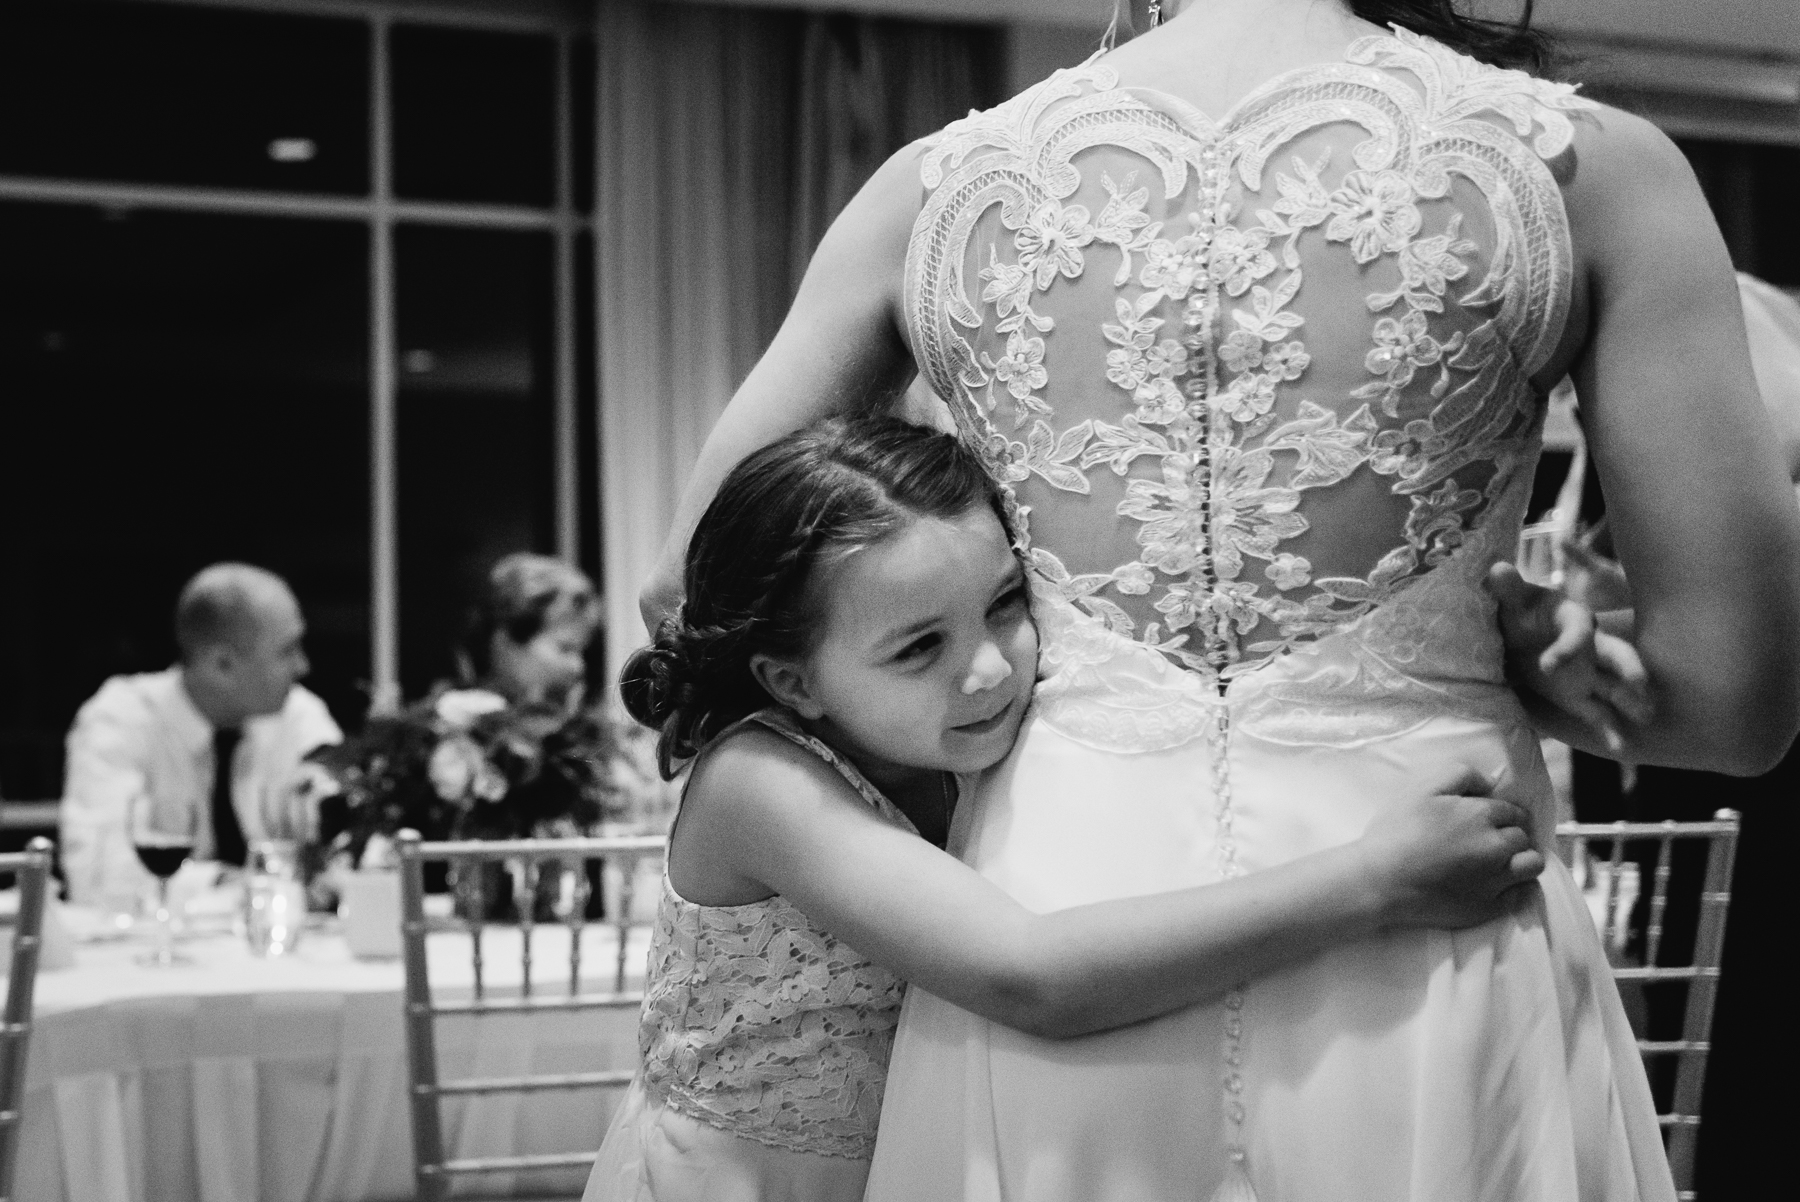 flower girl and bride hugging moment